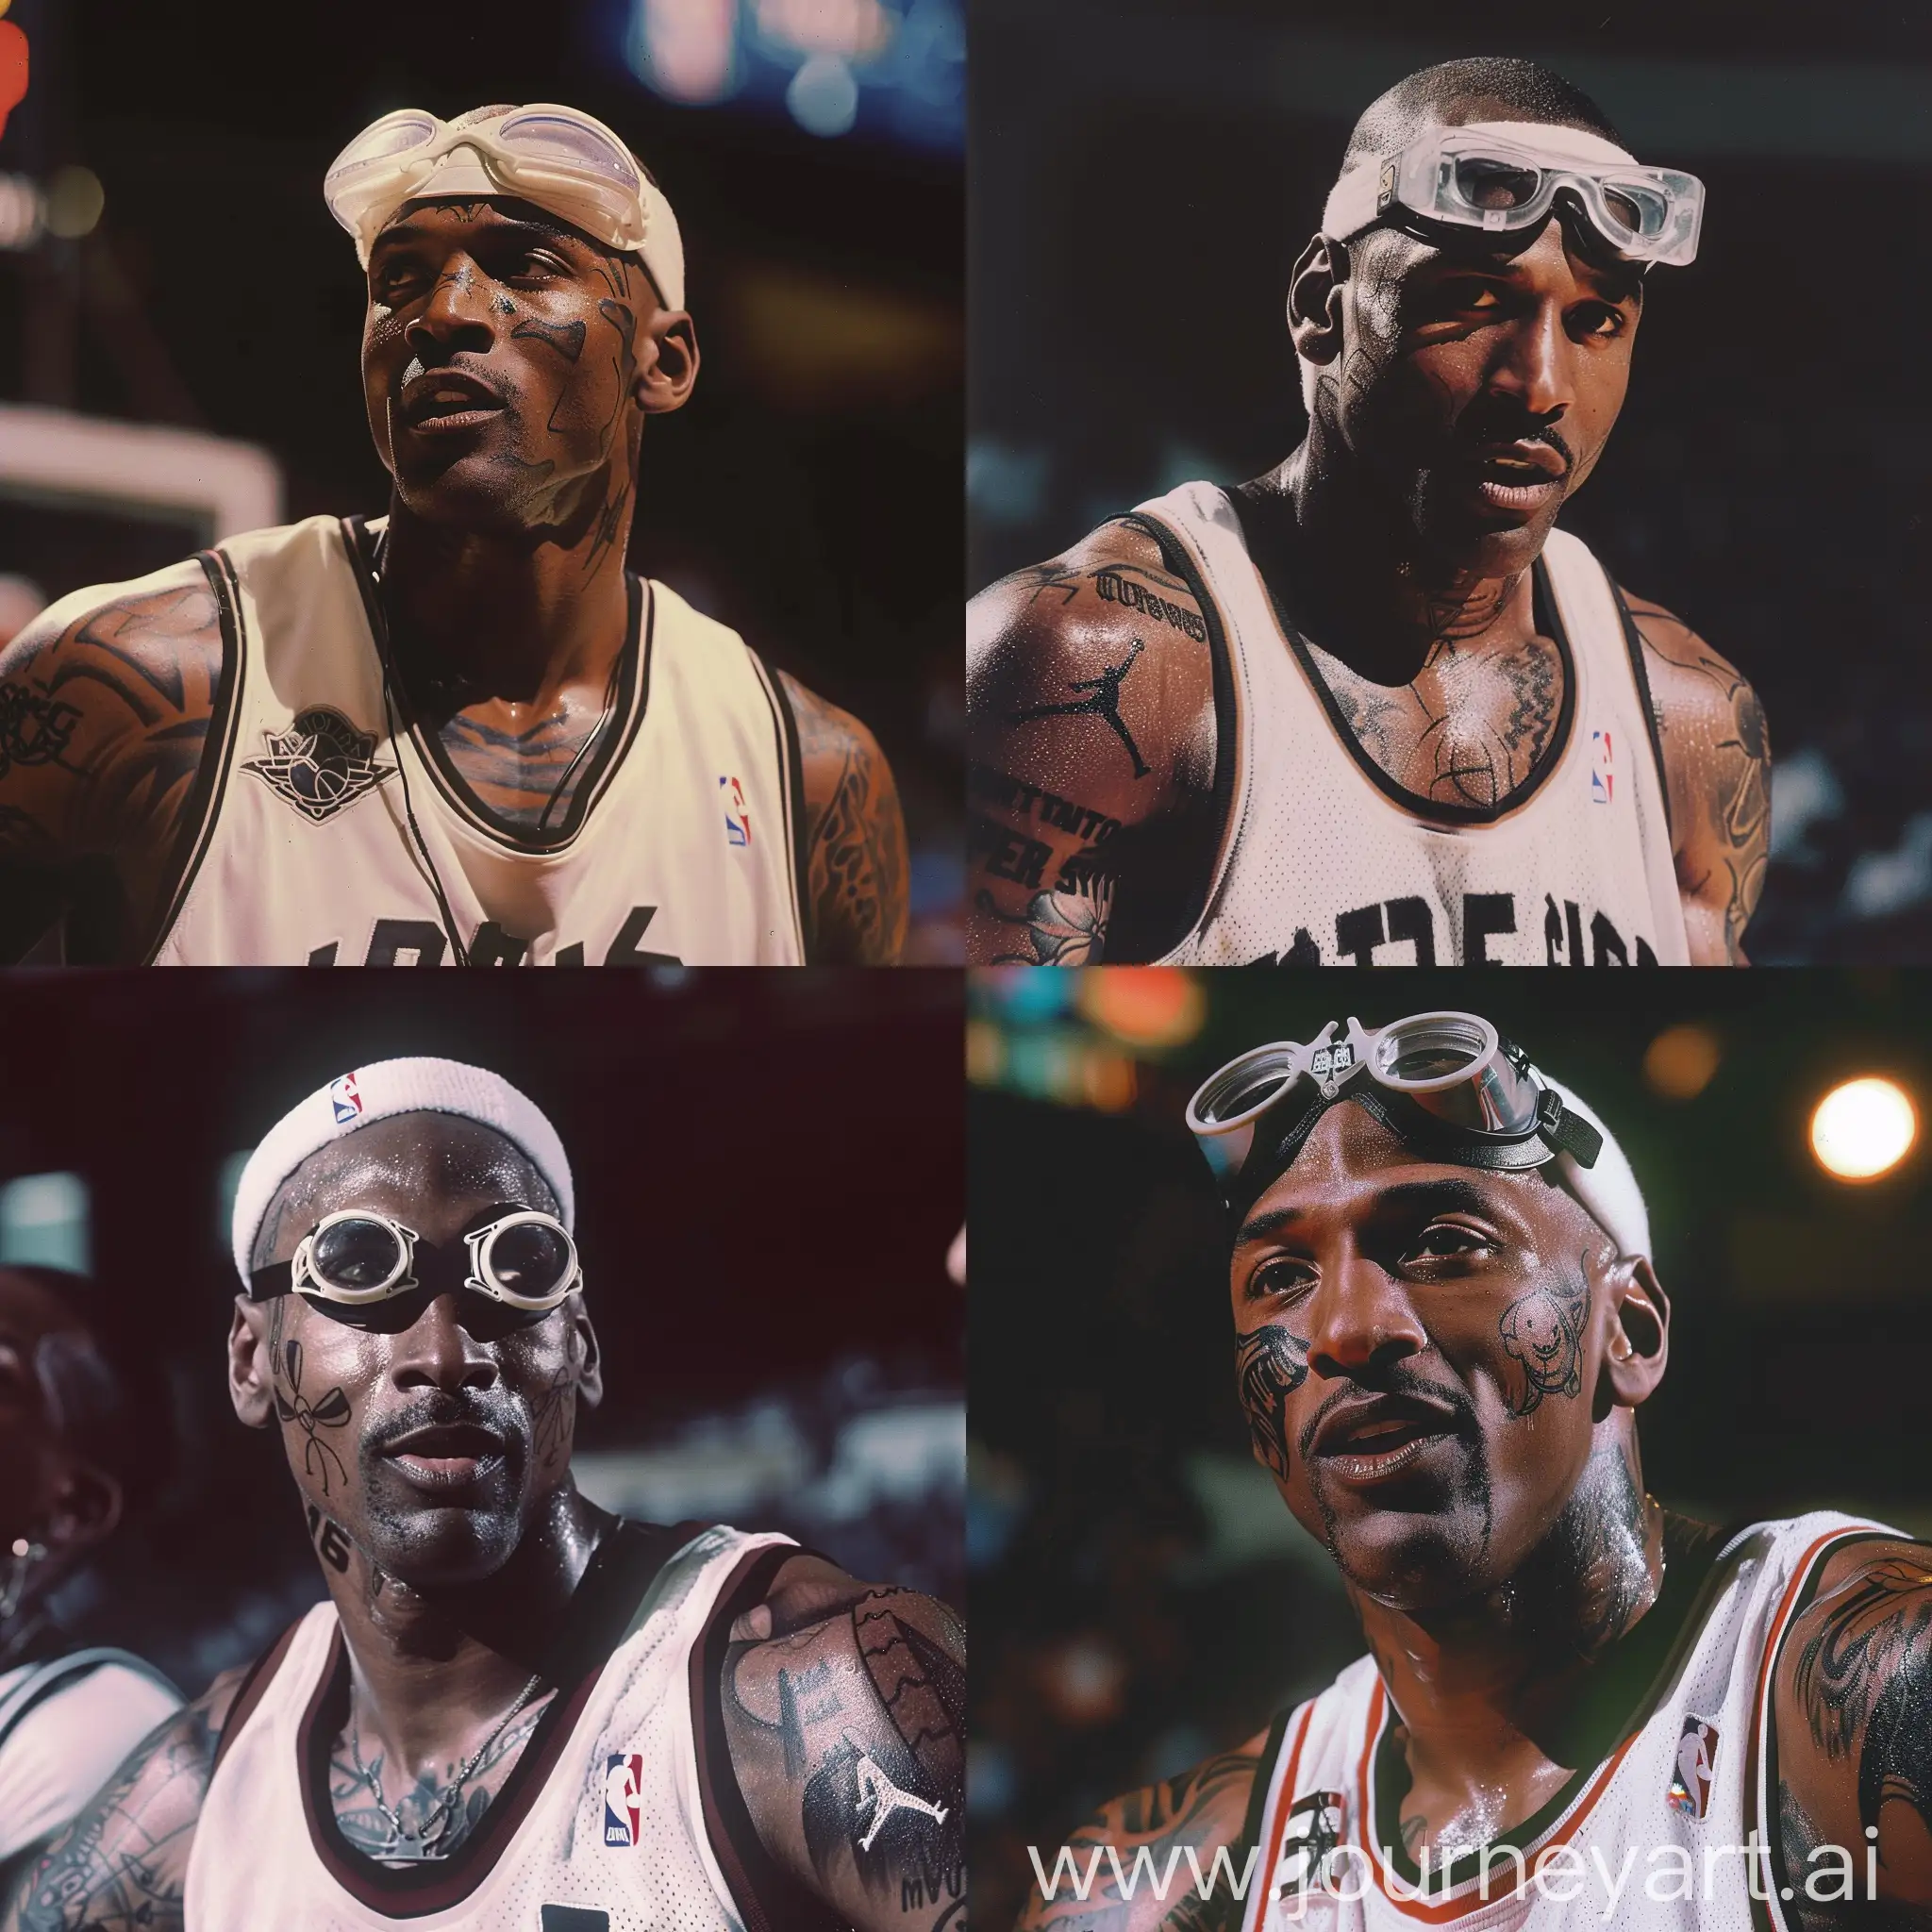 Michael-Jordan-Postgame-Interview-in-San-Antonio-Spurs-Jersey-with-Full-Body-Tattoos